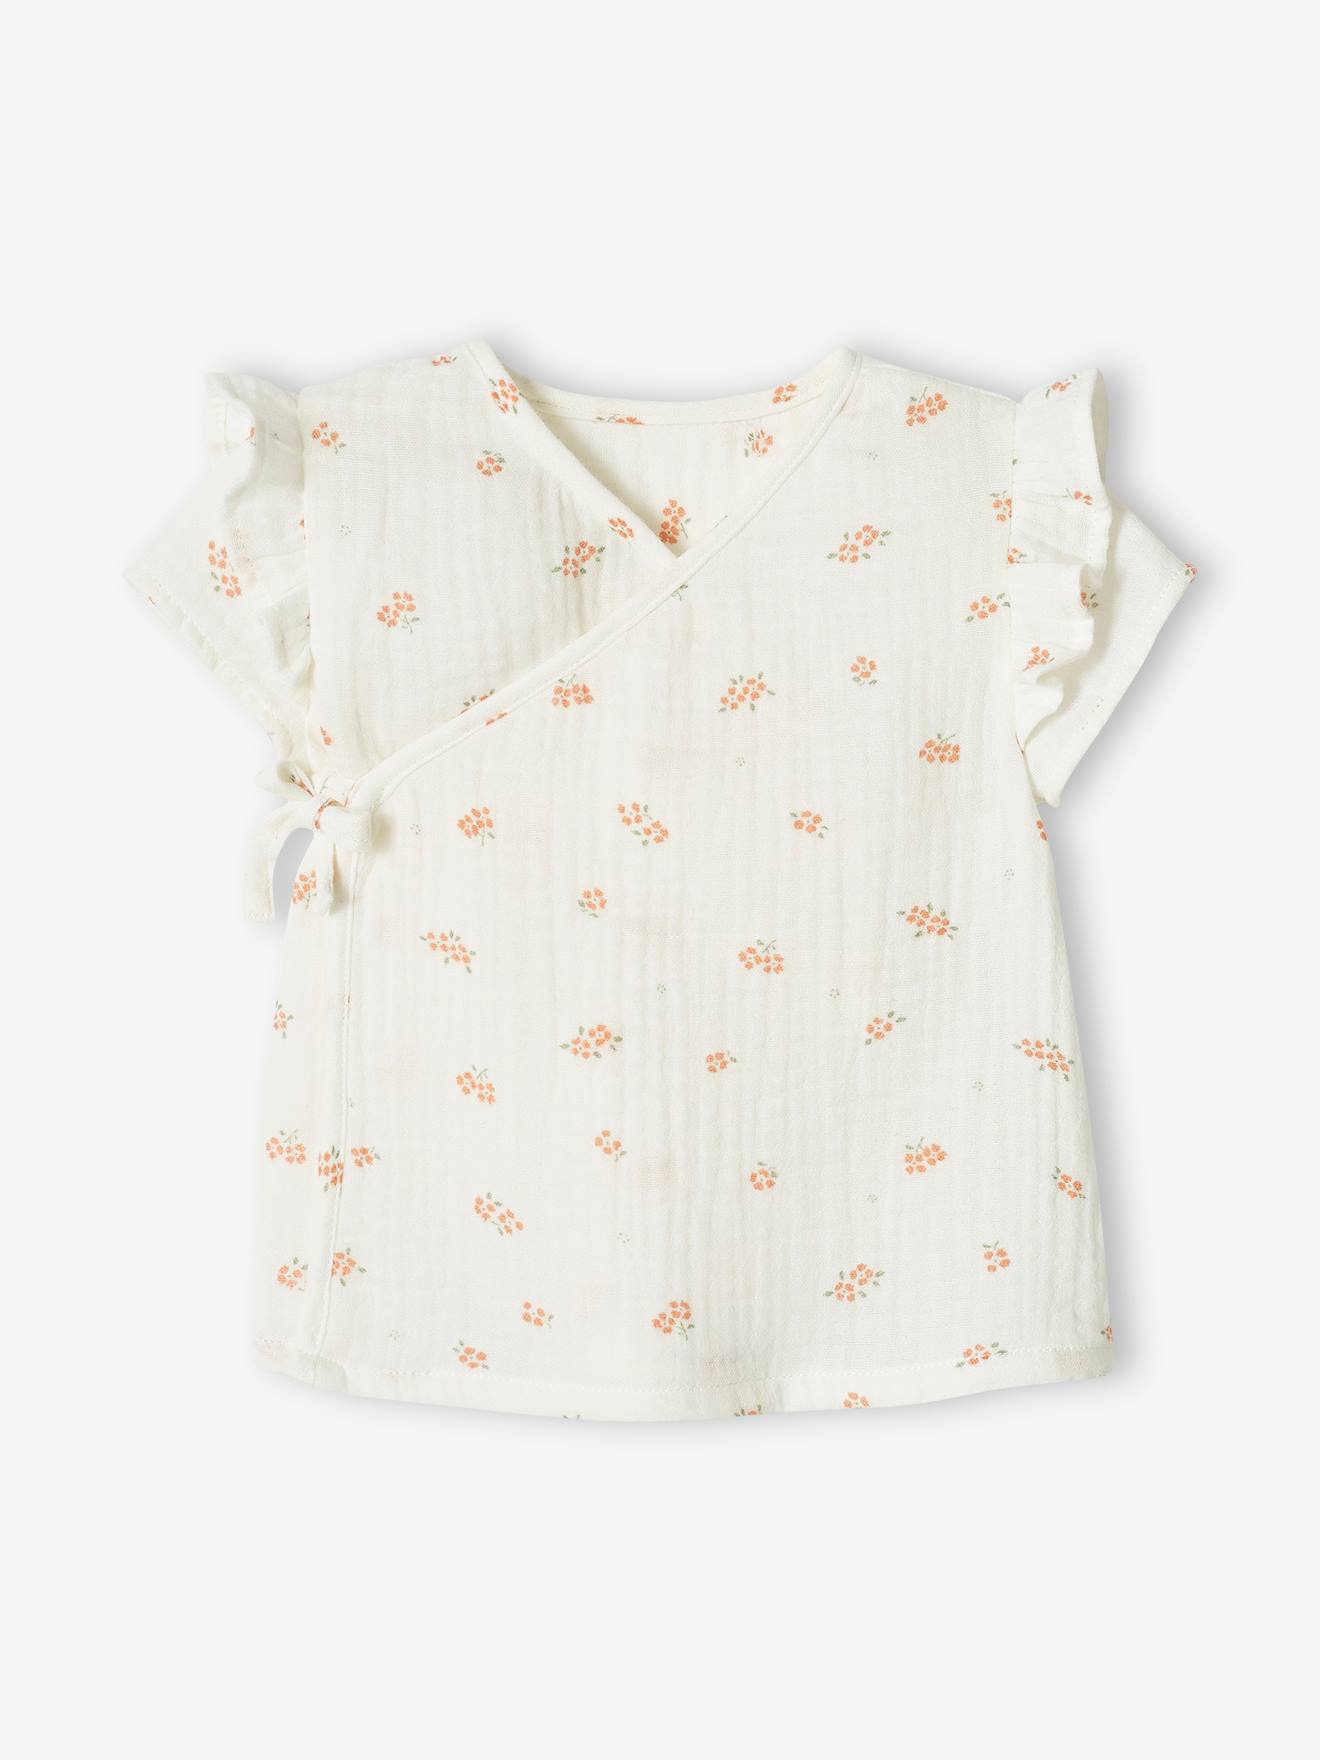 Wrap-Over Jacket in Cotton Gauze for Newborn Babies ecru